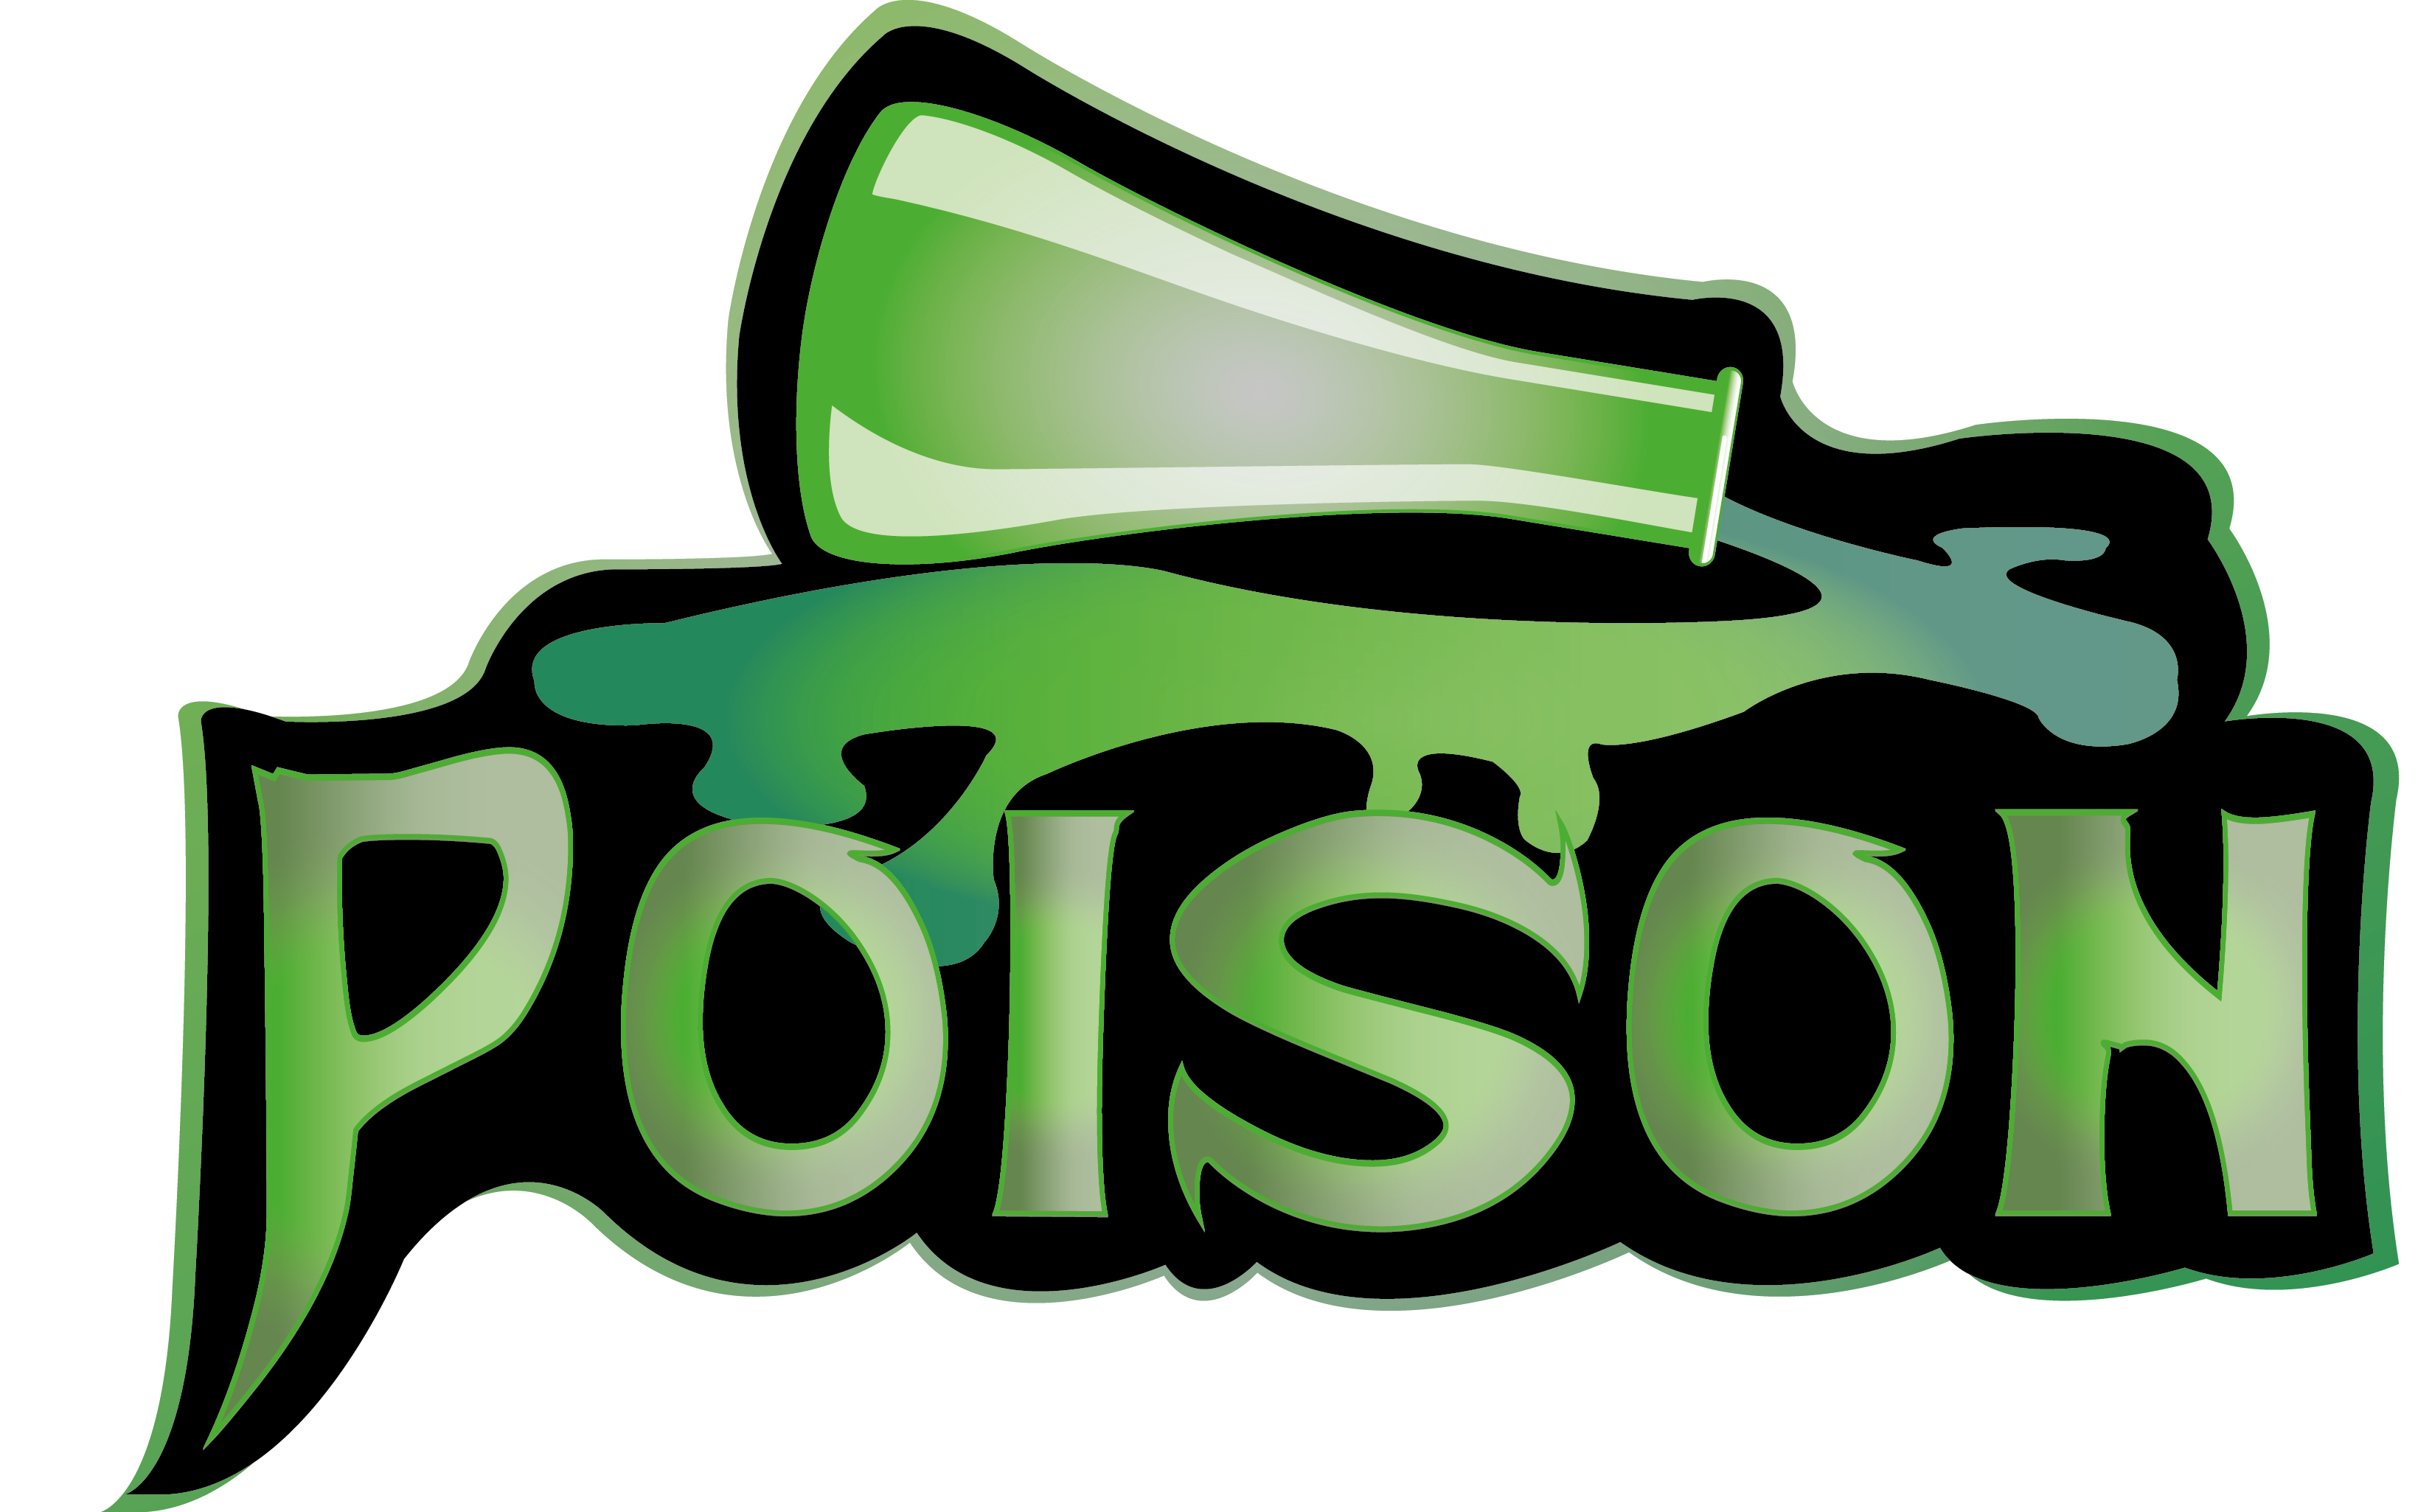 Poison HD wallpapers, Desktop wallpaper - most viewed